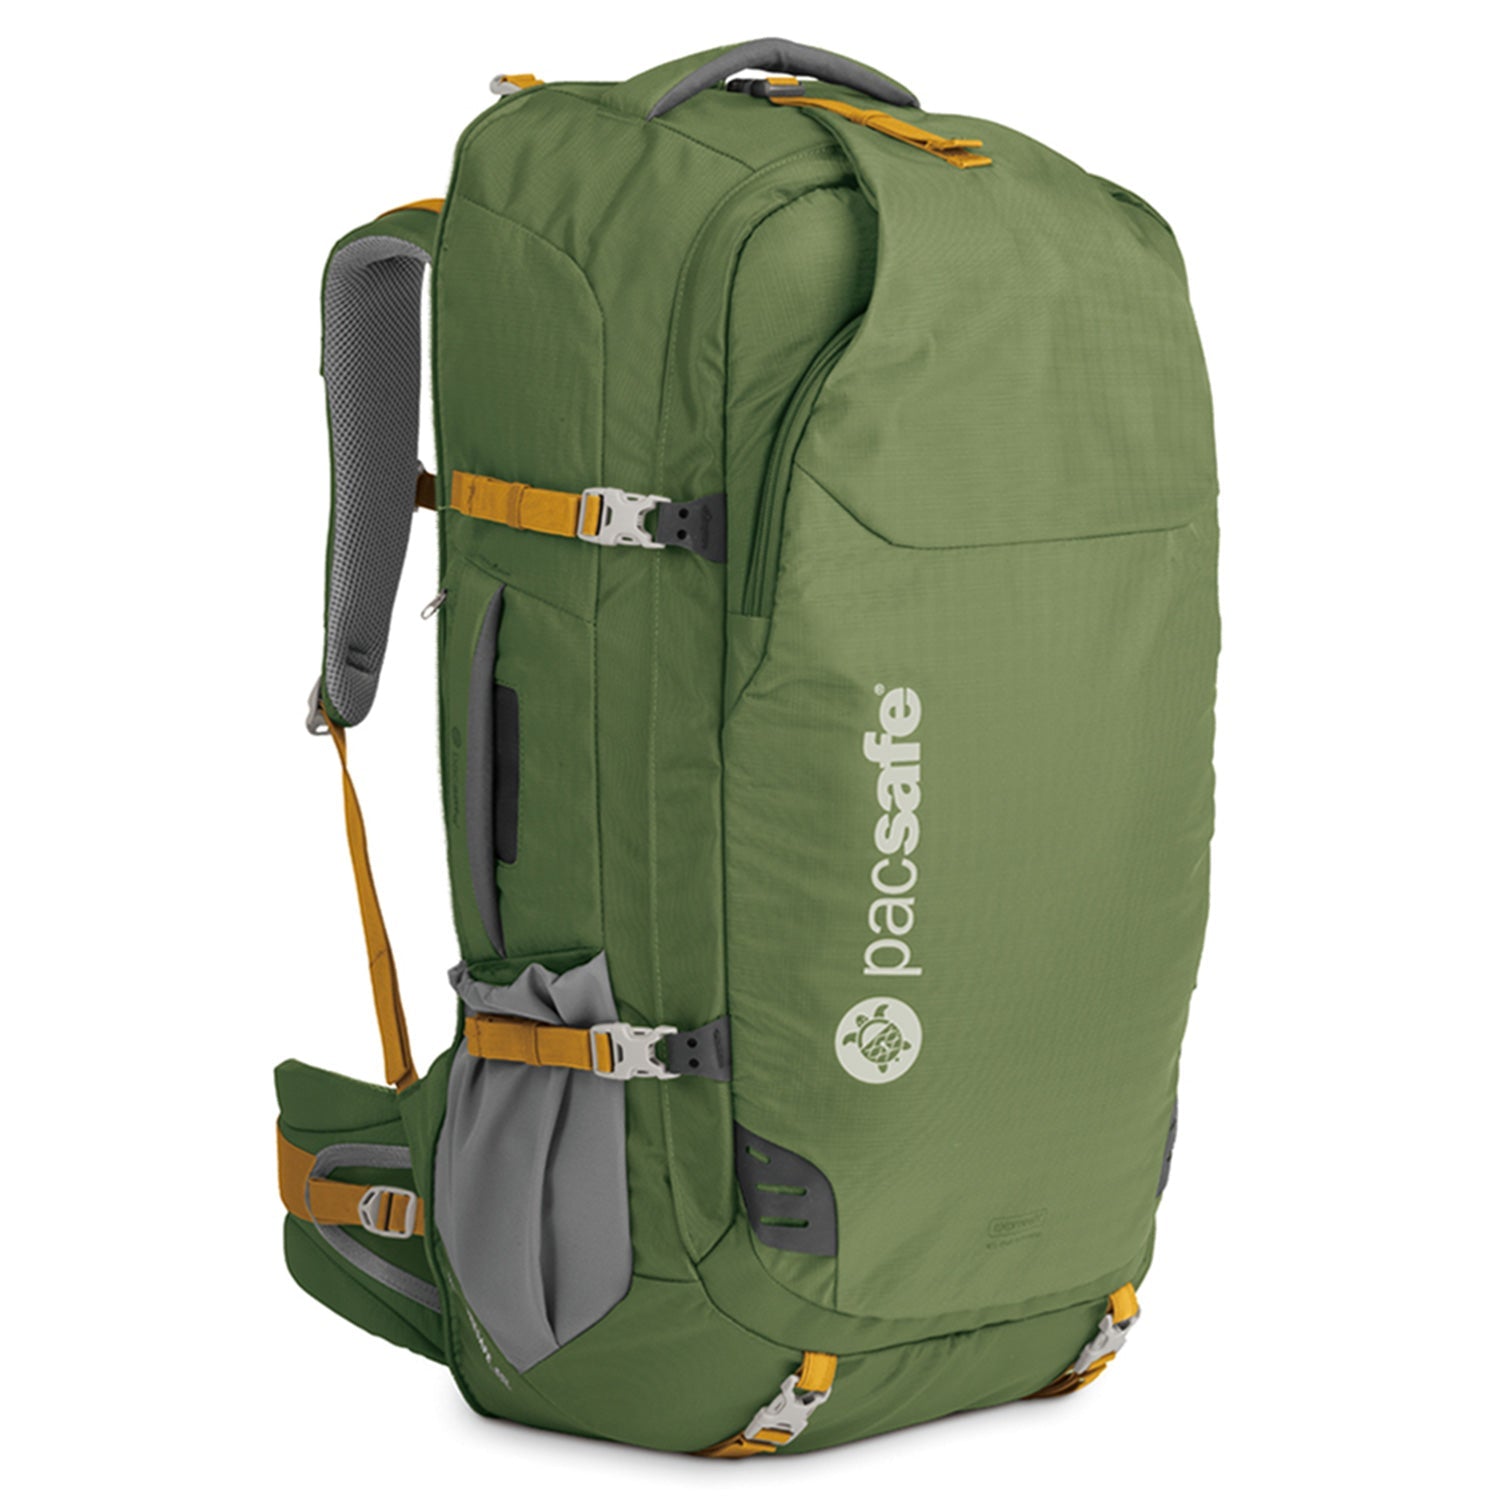 Pacsafe Backpacks & Luggage - Price Beat Guarantee